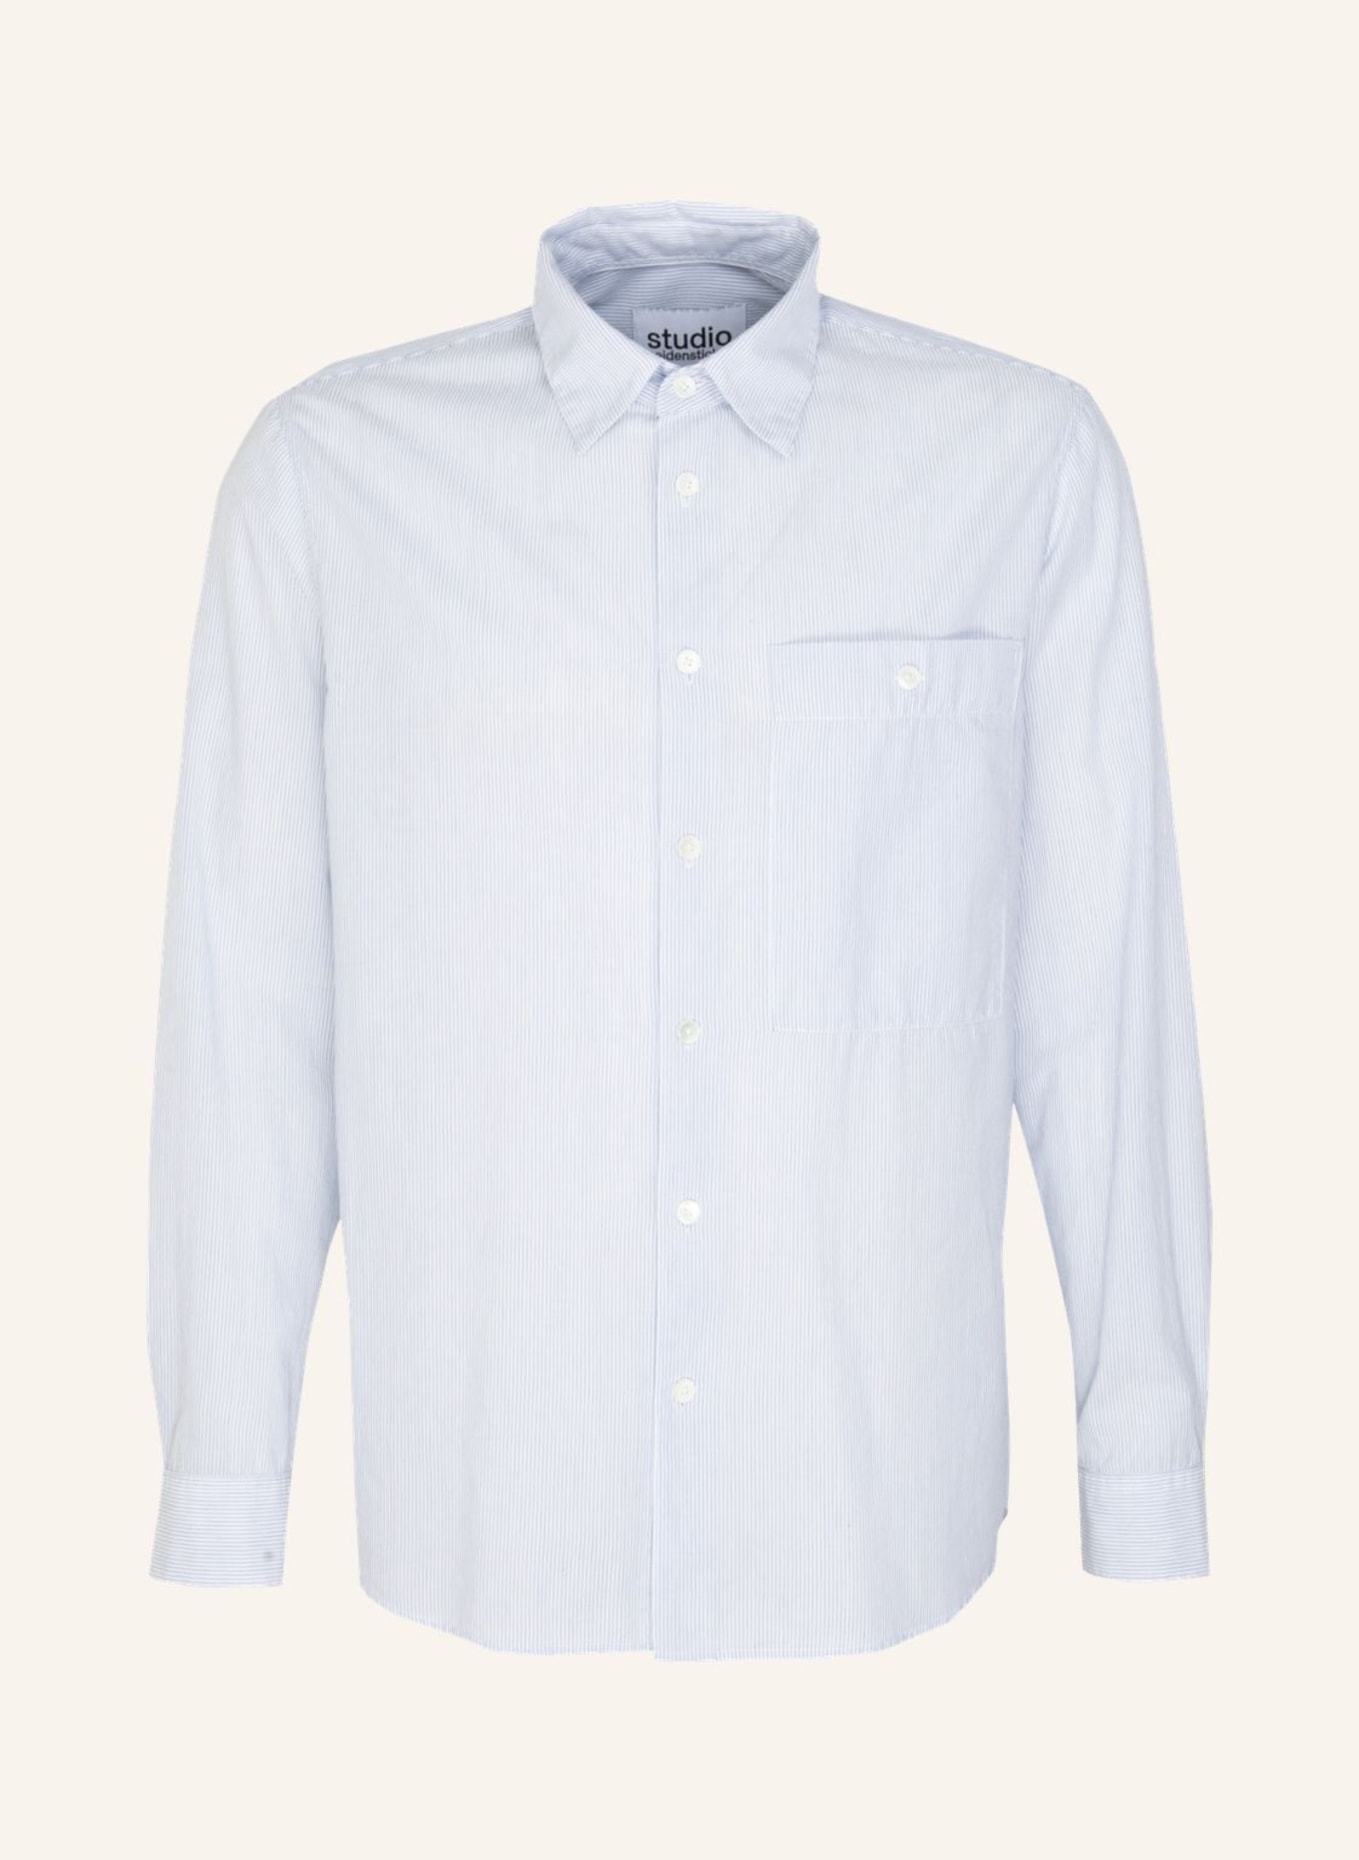 studio seidensticker Hemd, Casual Hemd Regular Fit, Farbe: BLAU (Bild 1)